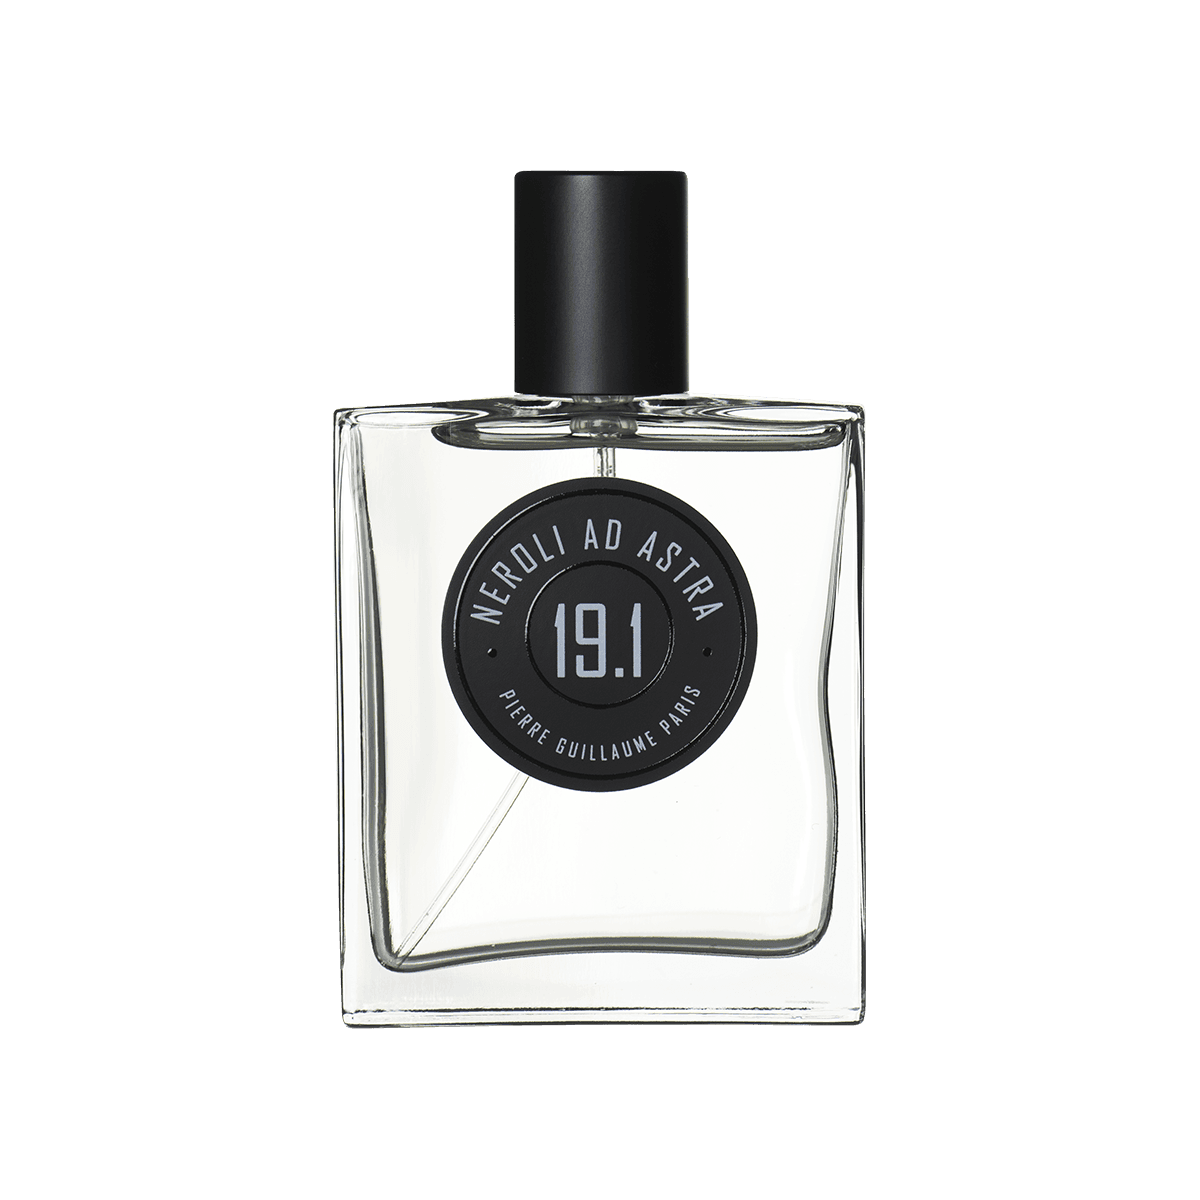 Pierre Guillaume Paris - 19.1 Neroli Ad Astra 50 ml | Perfume Lounge